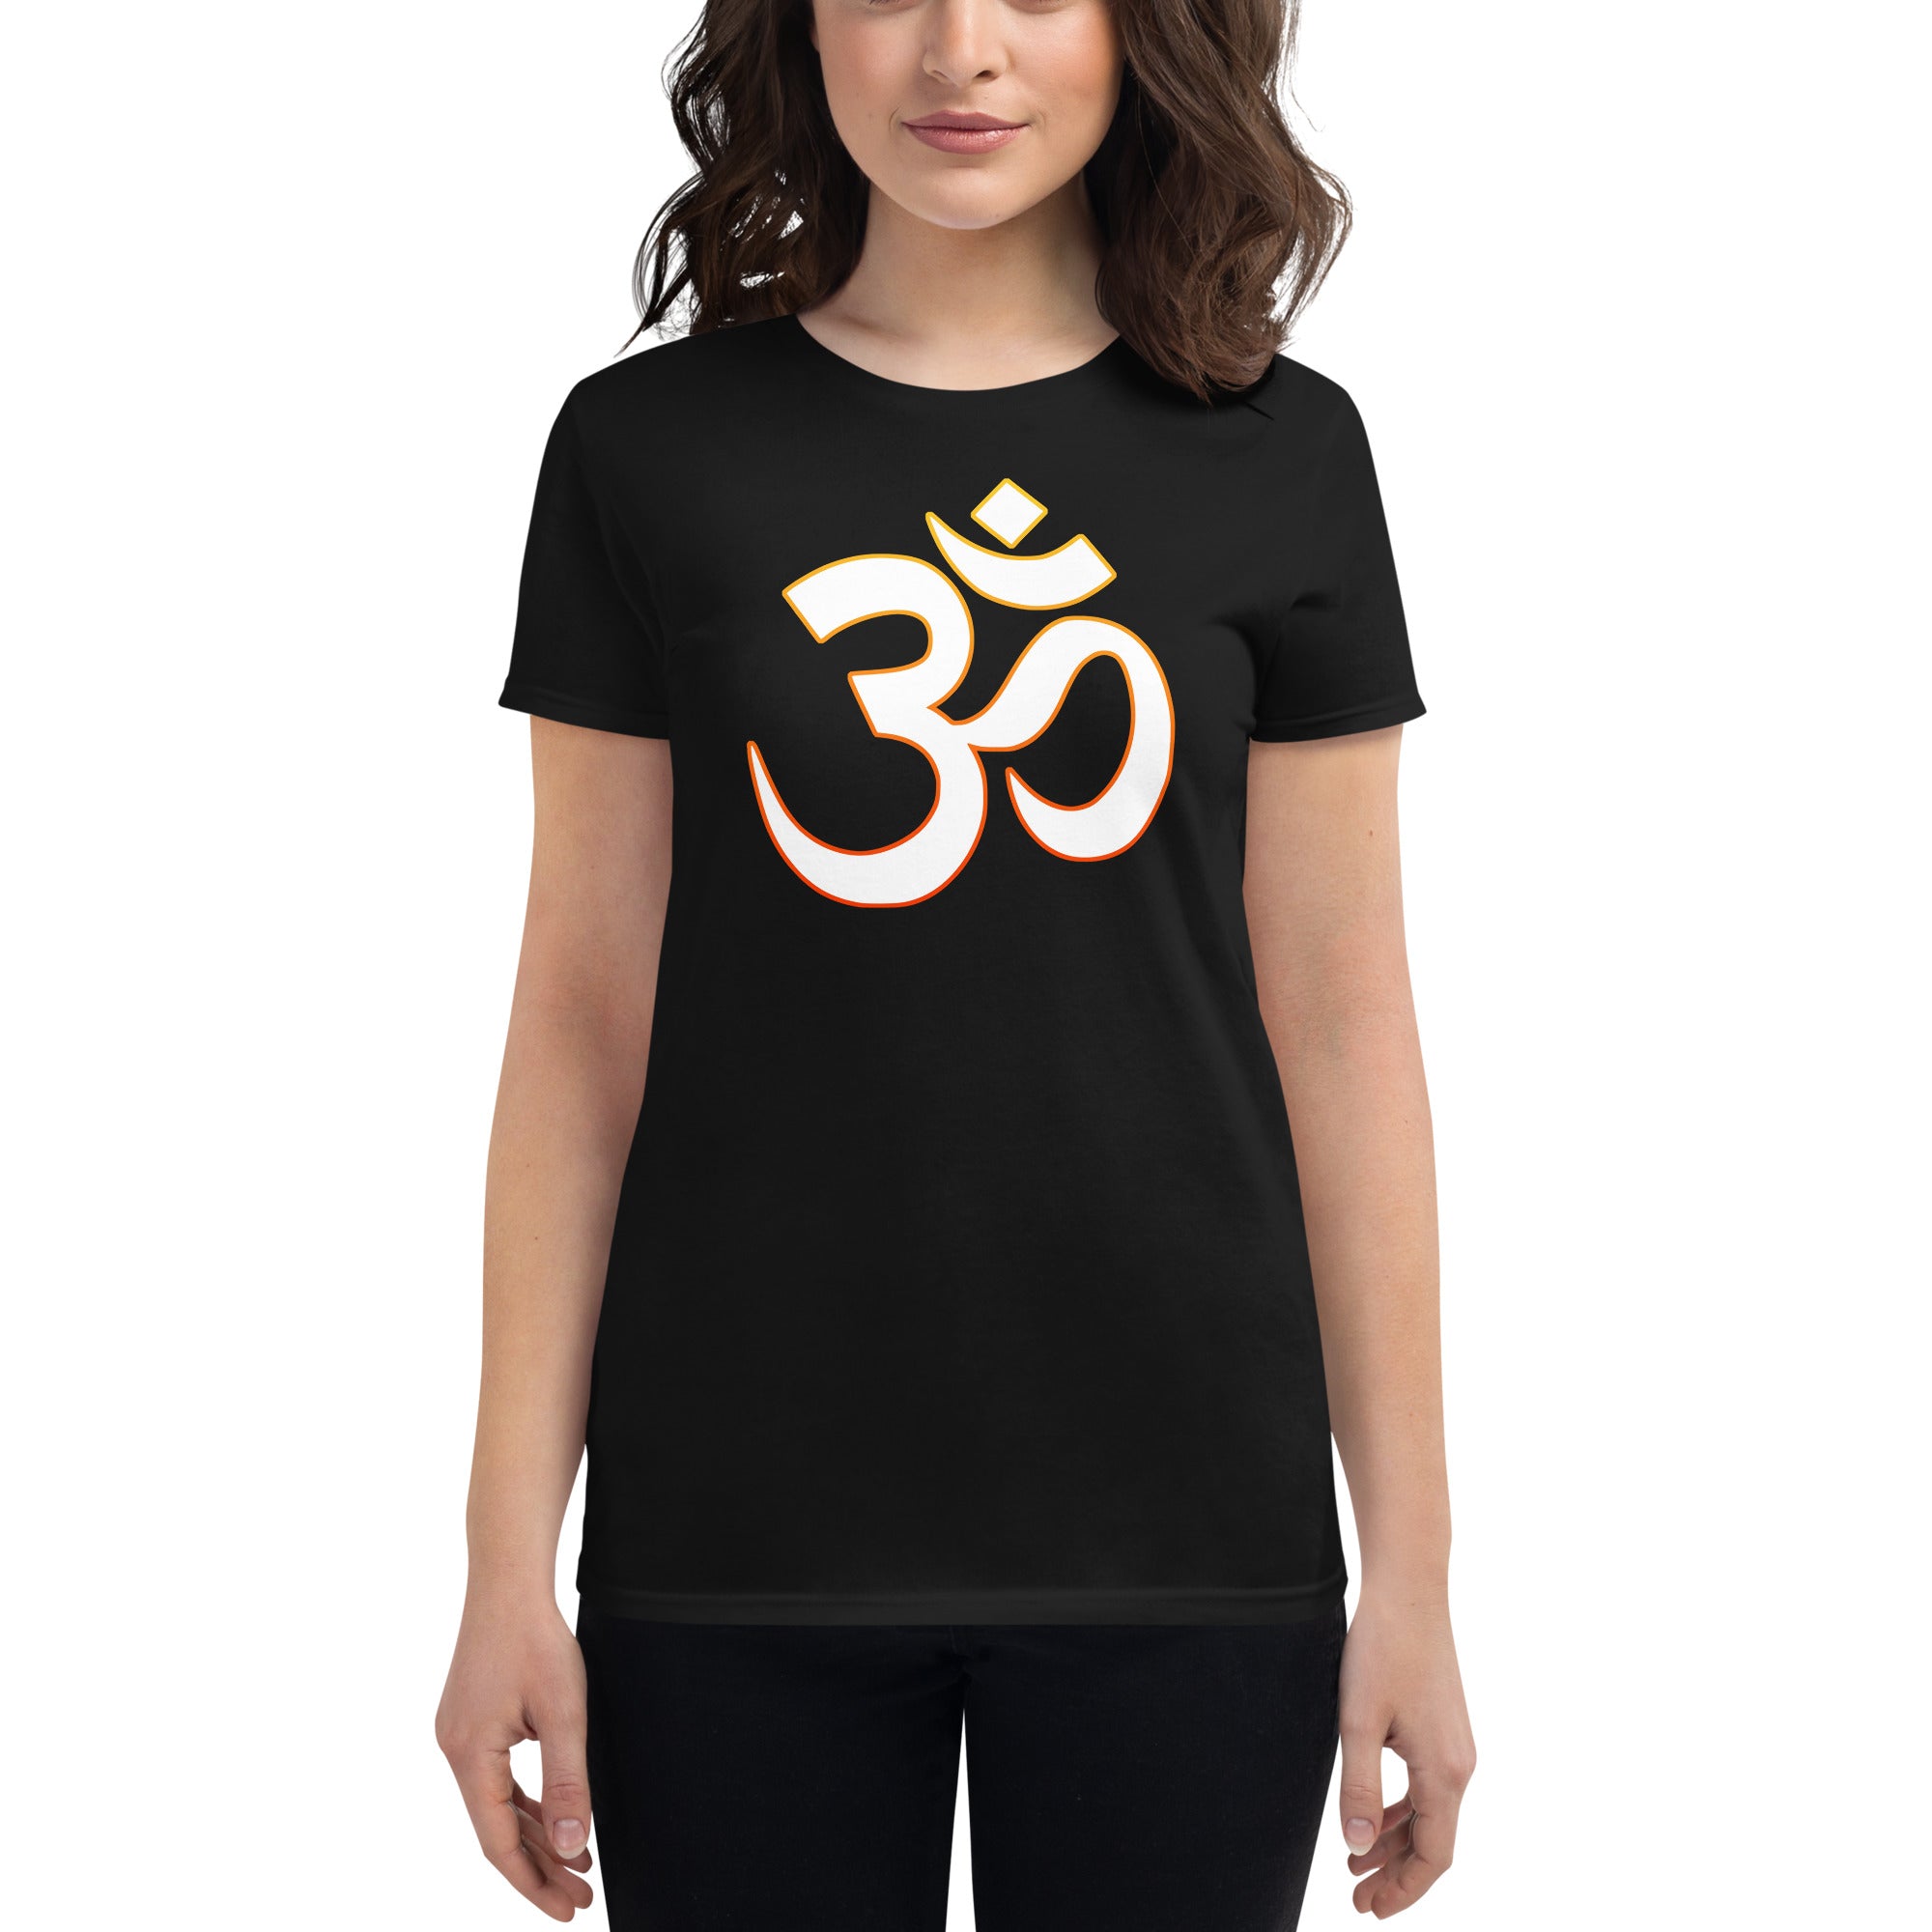 OM Sacred Spiritual Vibration of the Universe Women's Short Sleeve Babydoll T-shirt